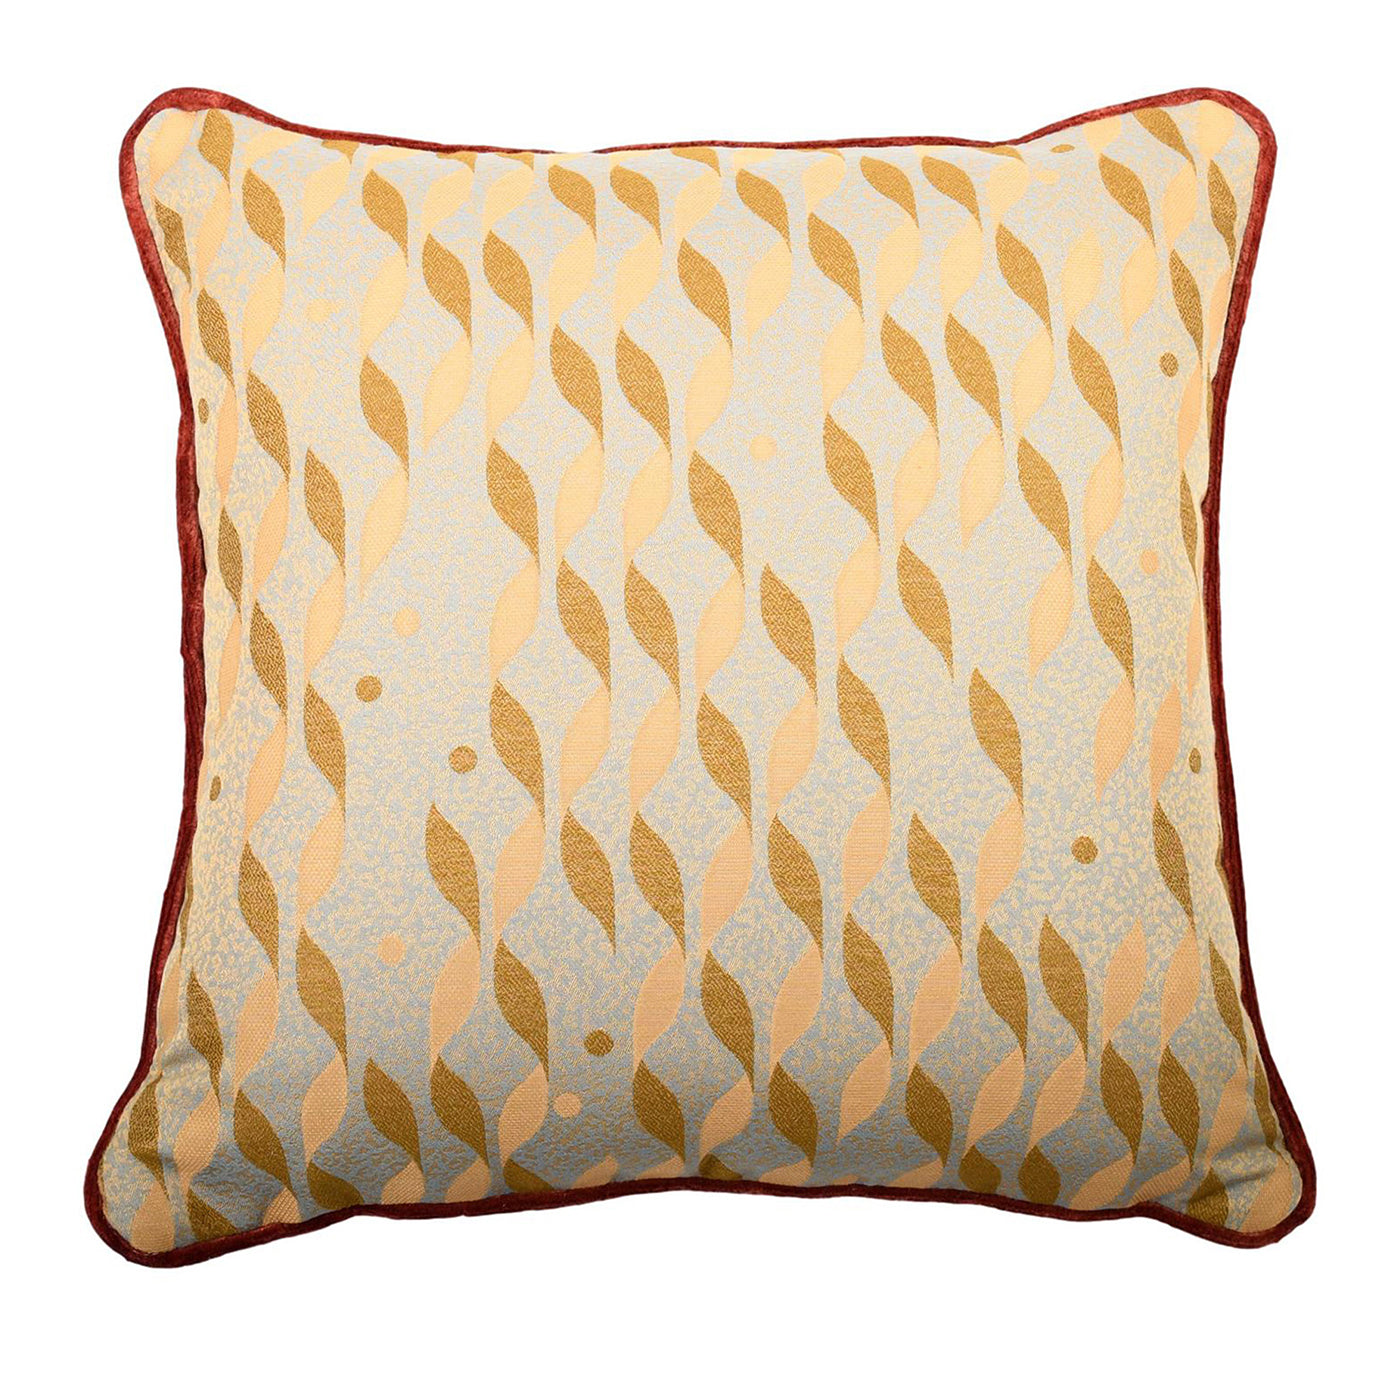 Gold Carrè Cushion in Talia Jacquard Fabric - Main view